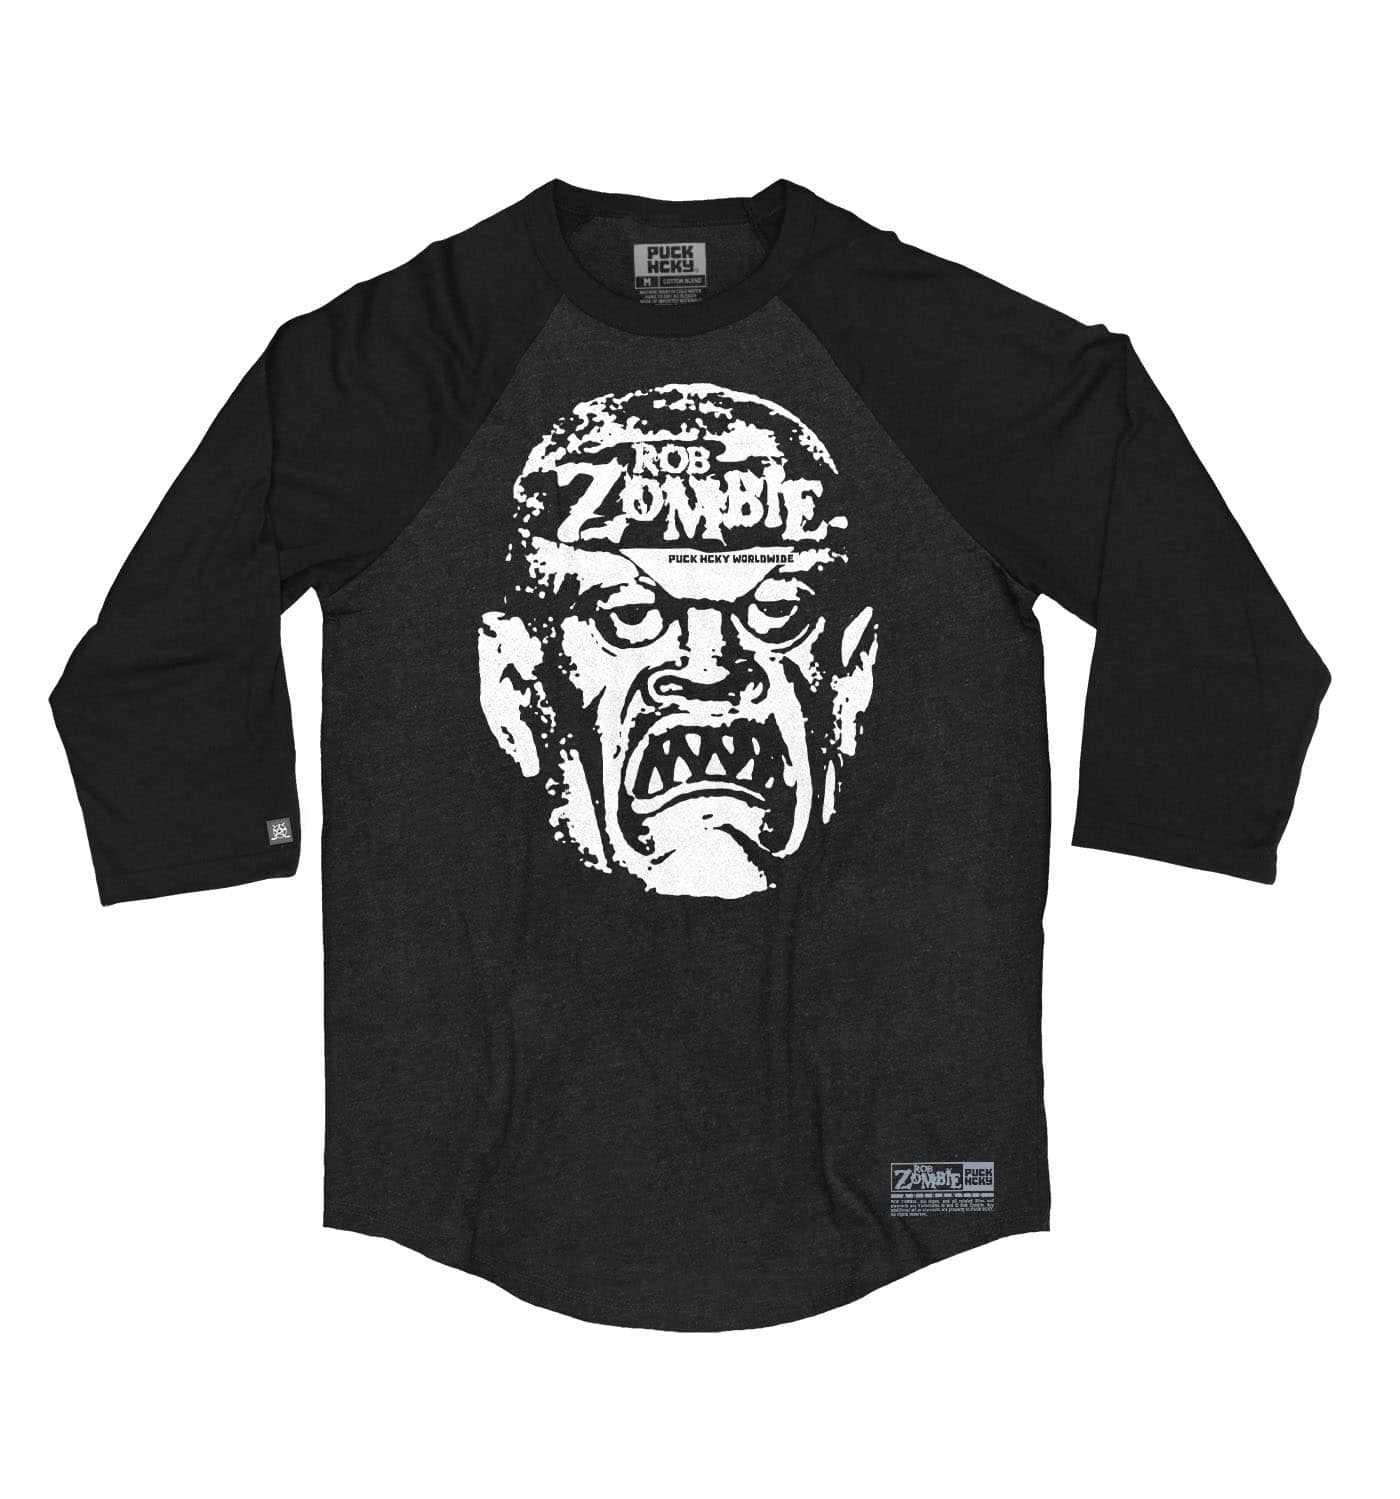 ROB ZOMBIE 'SKATERBEAST' hockey raglan t-shirt in black heather with black sleeves